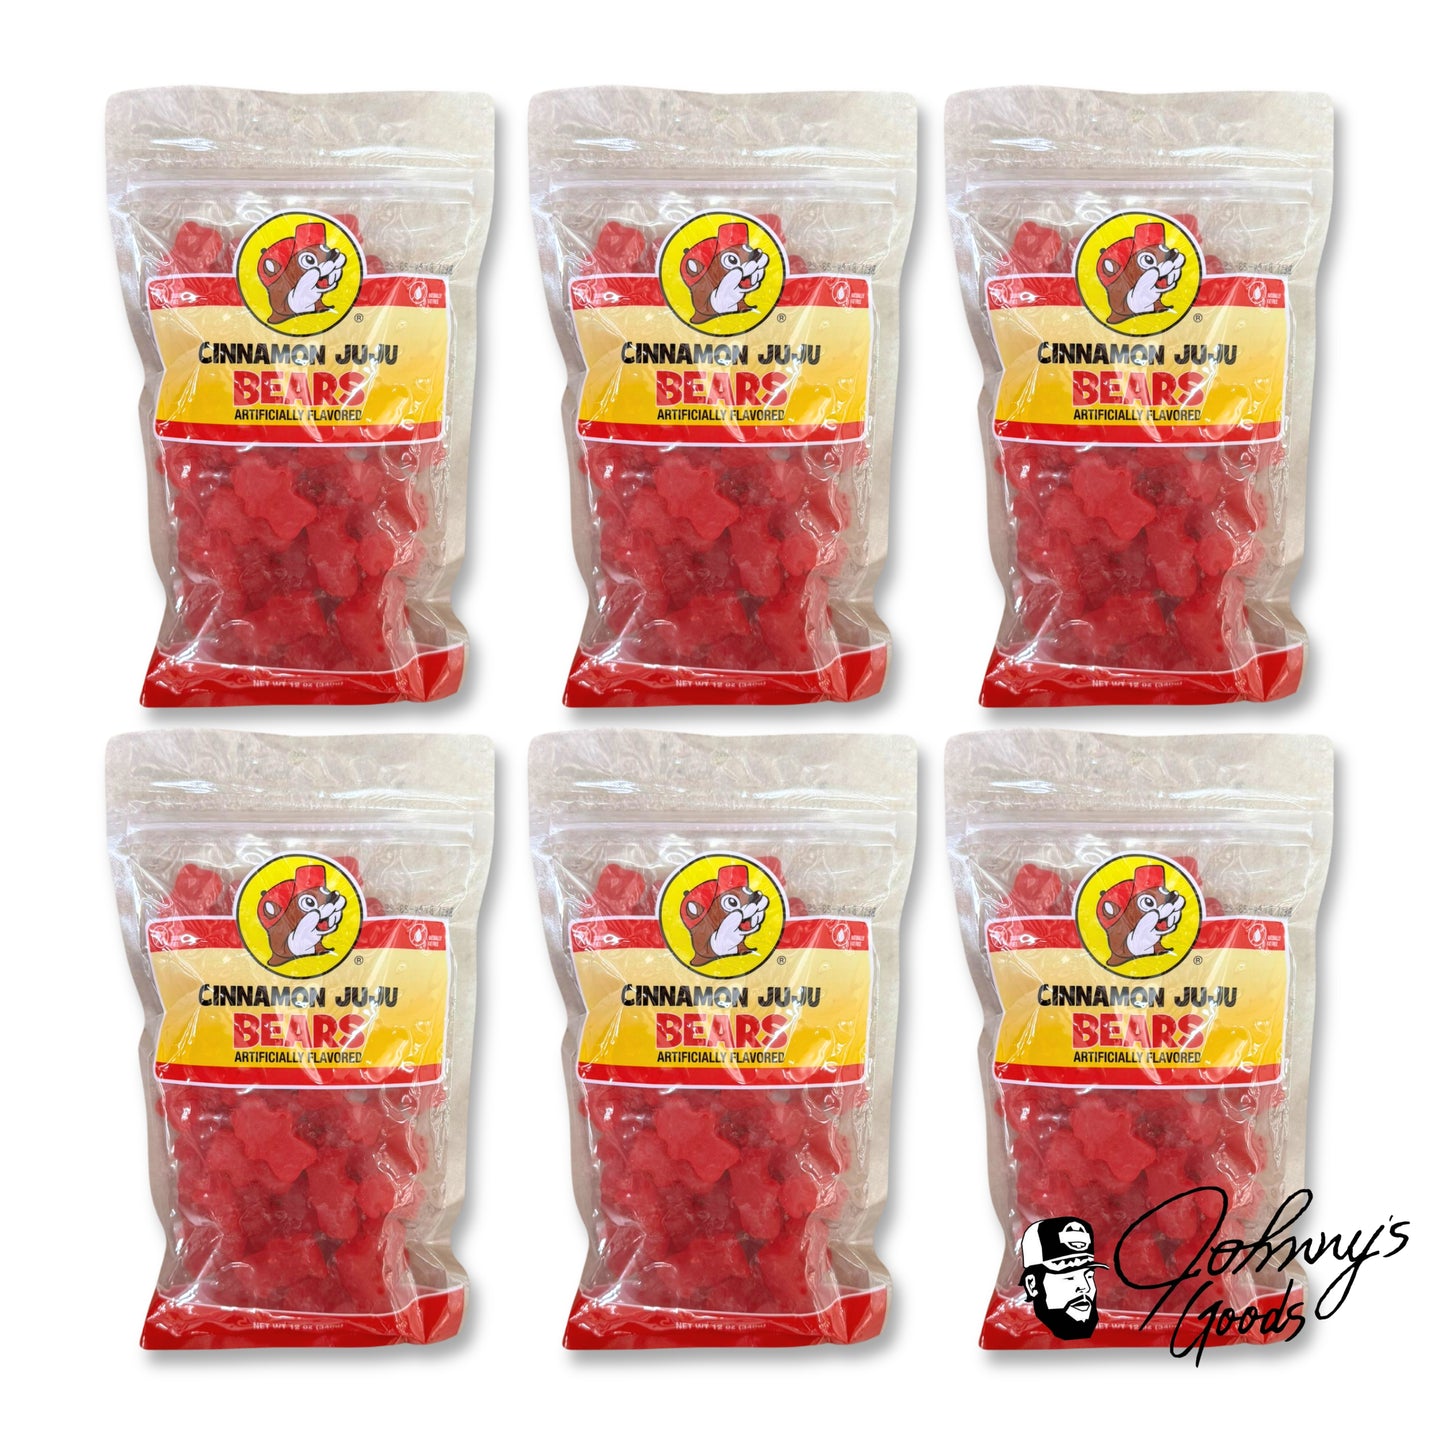 Buc-ee's Gummi Bears Candy